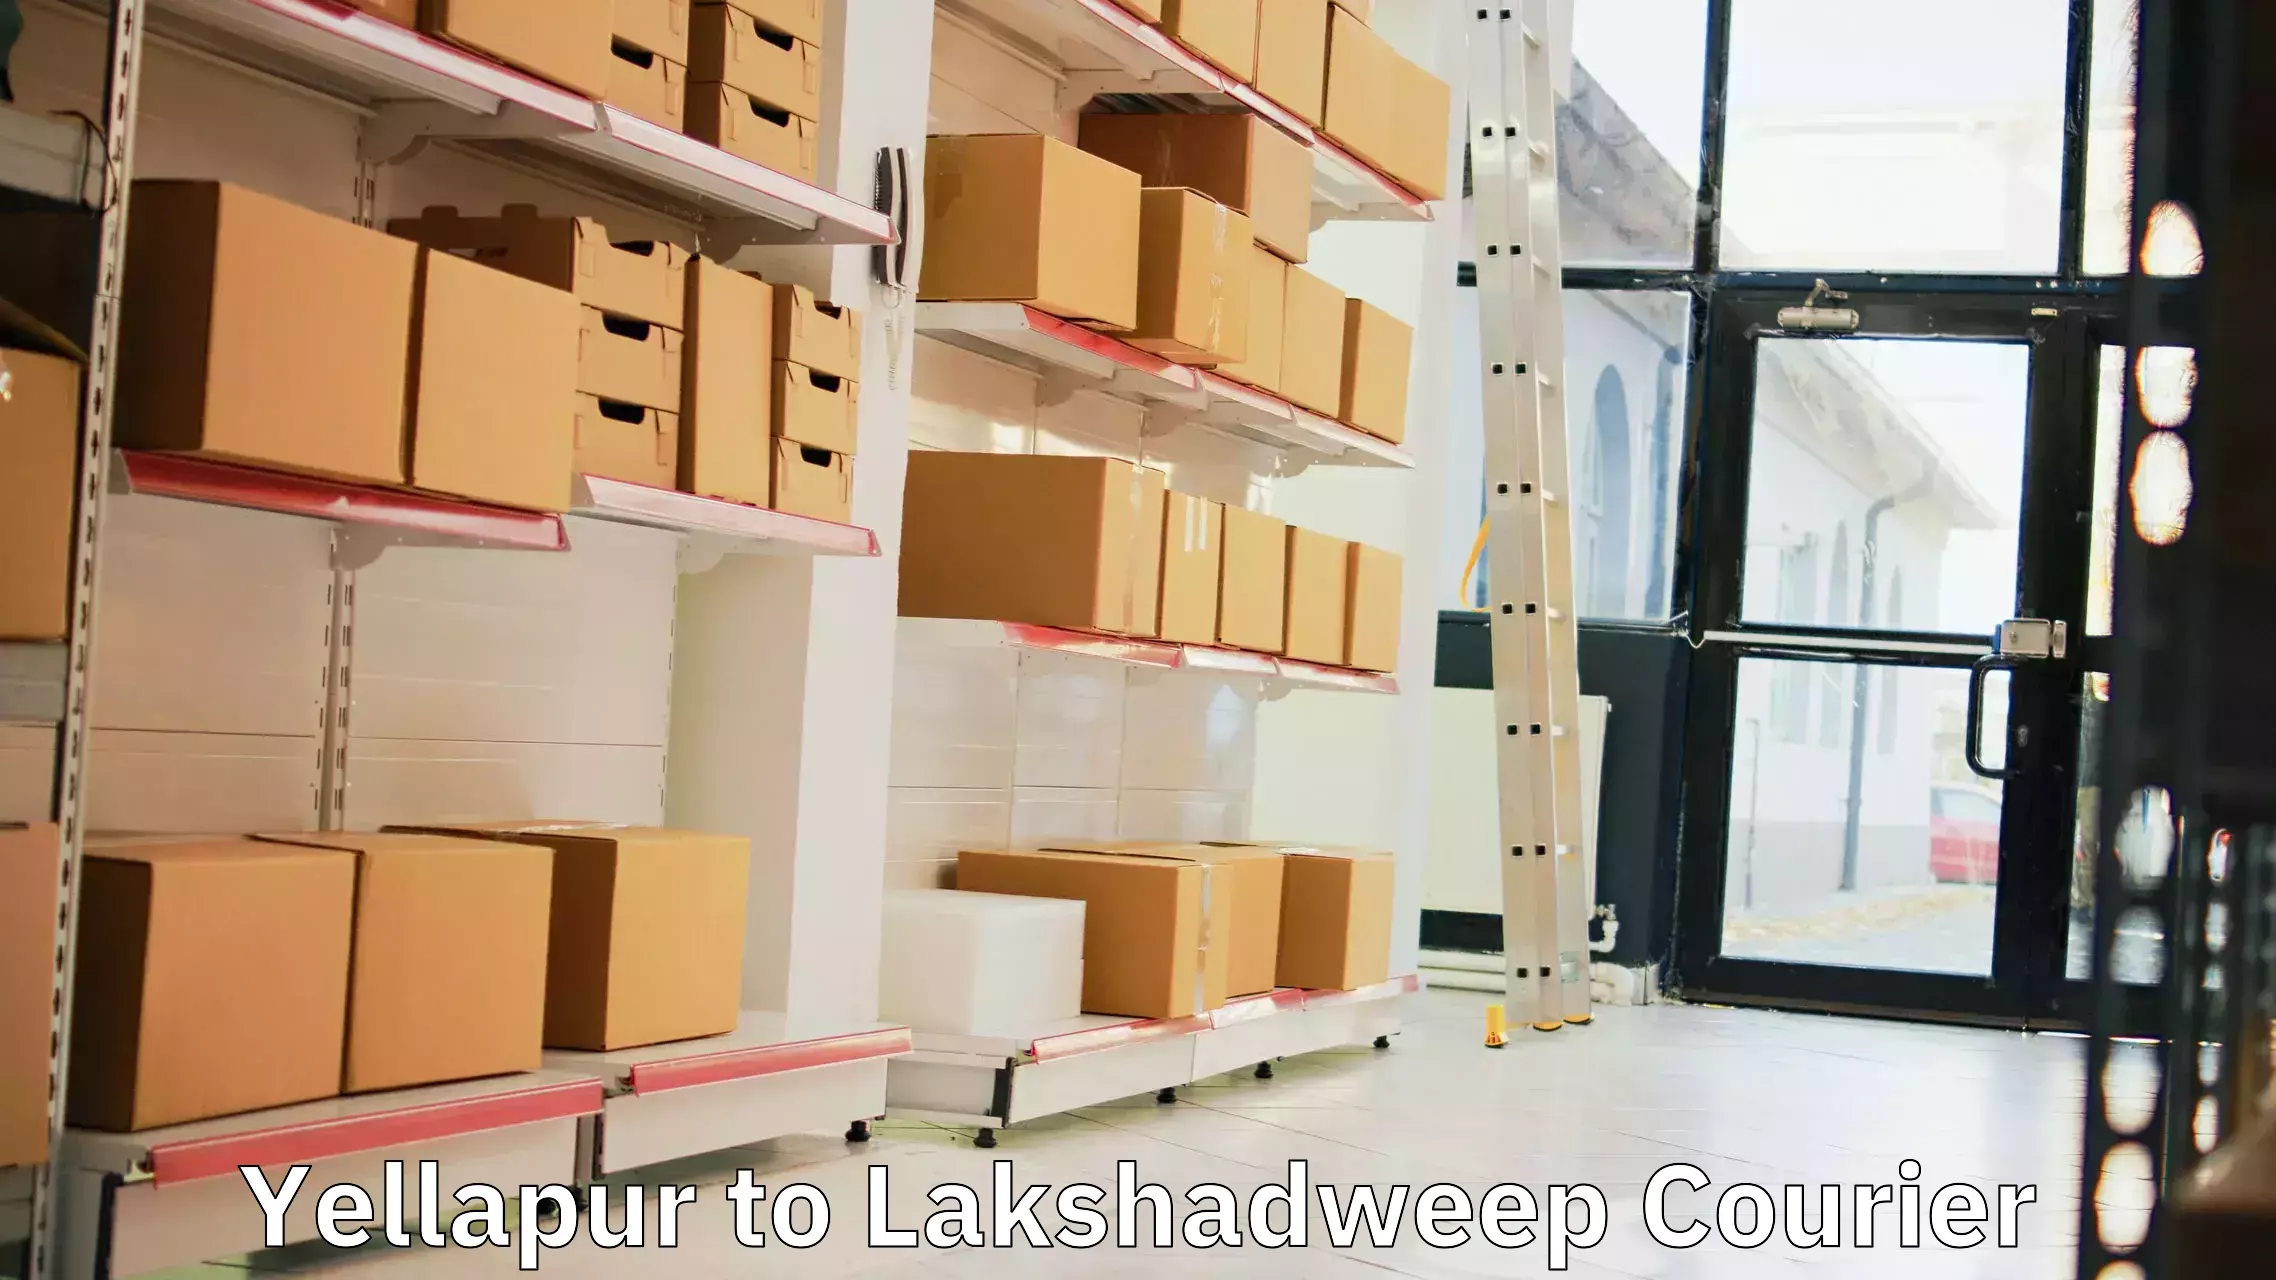 Express logistics providers Yellapur to Lakshadweep